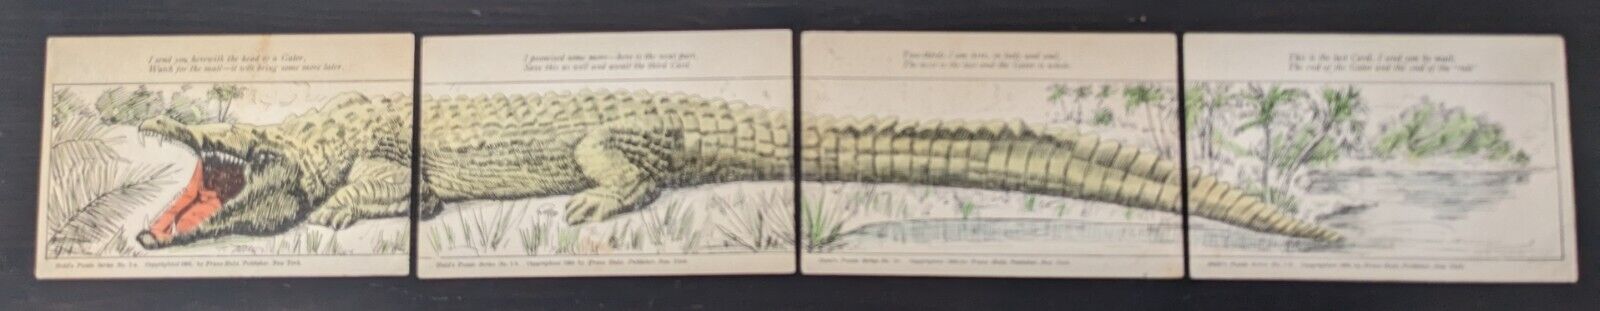 Alligator 4-Piece Postcard Set Complete Huld\'s Puzzle Series 1a, 1b, 1c, 1d